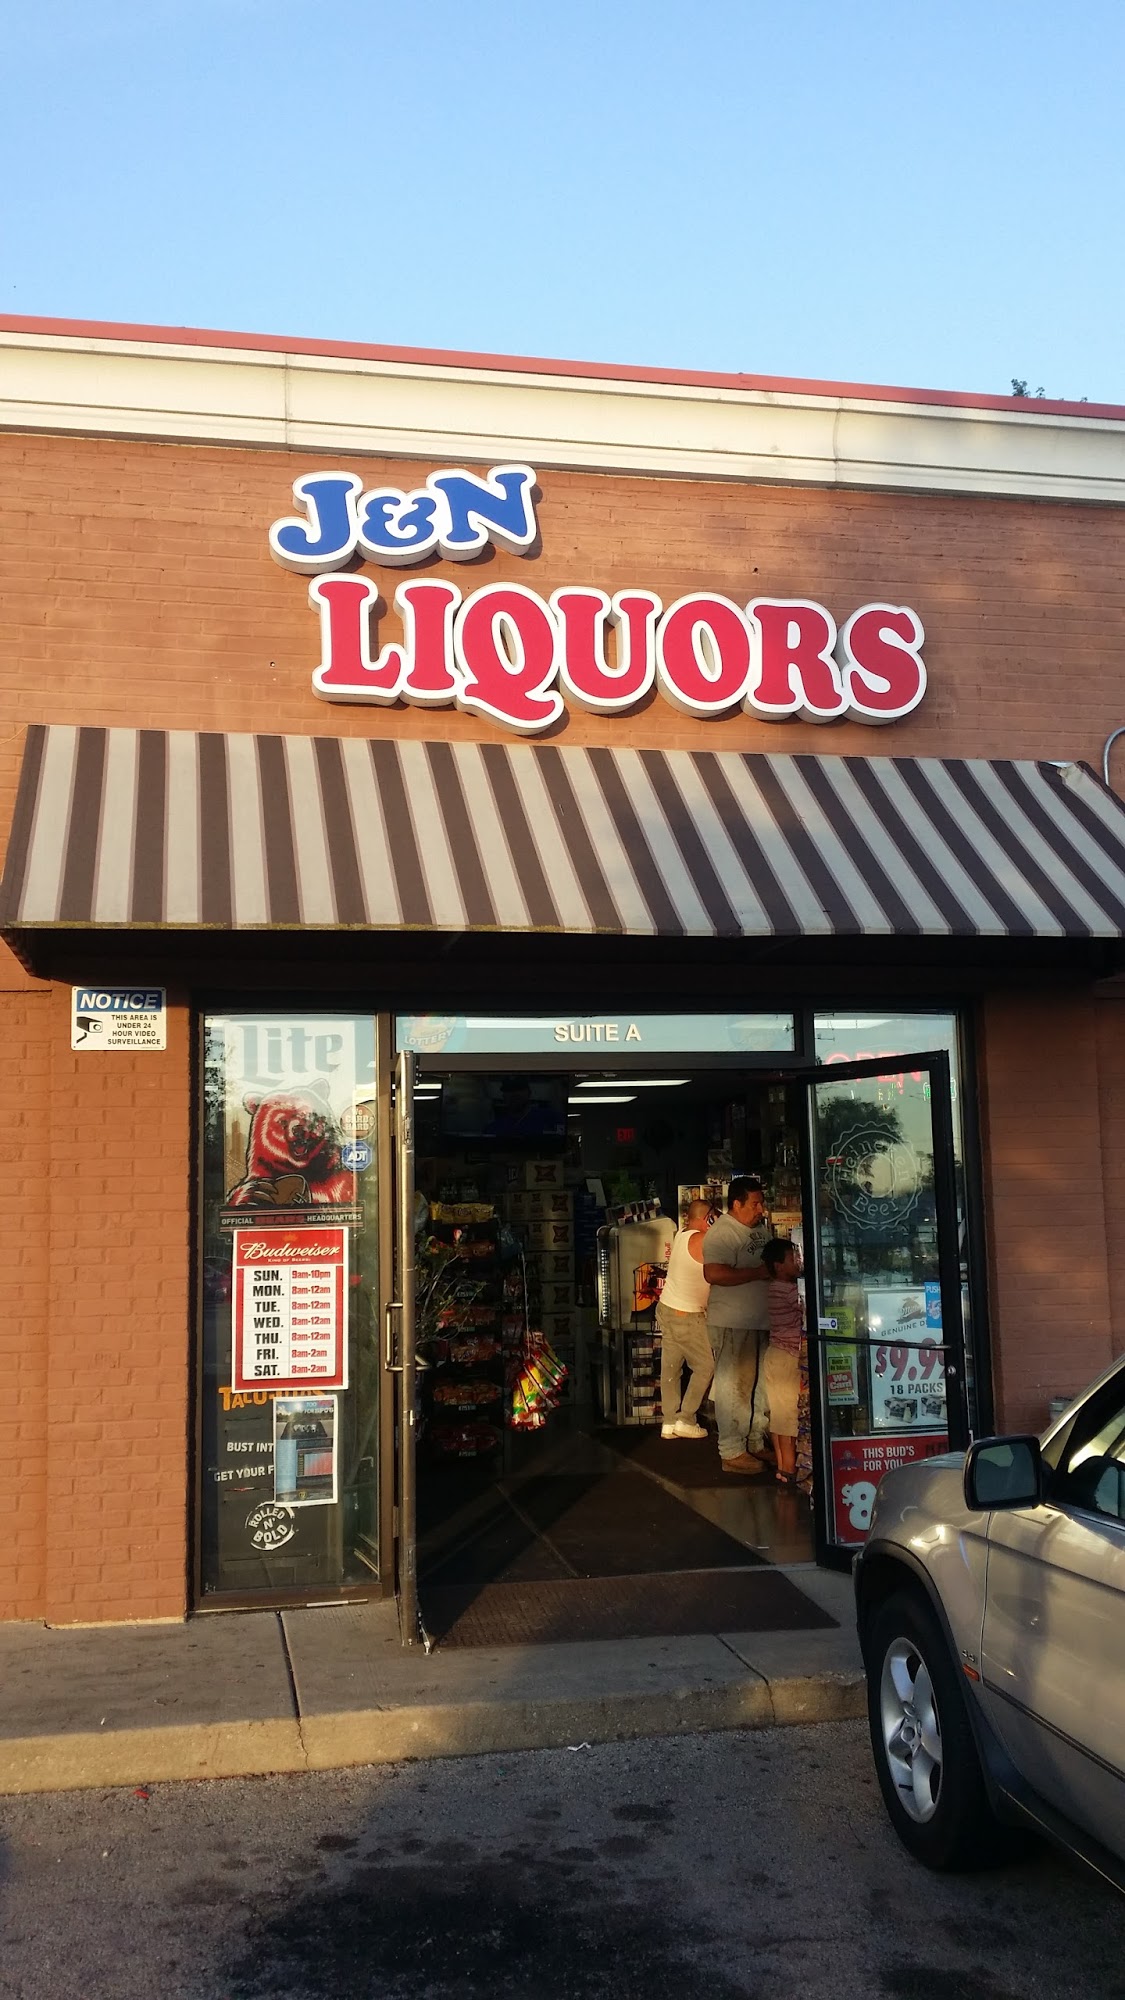 J & N Liquors